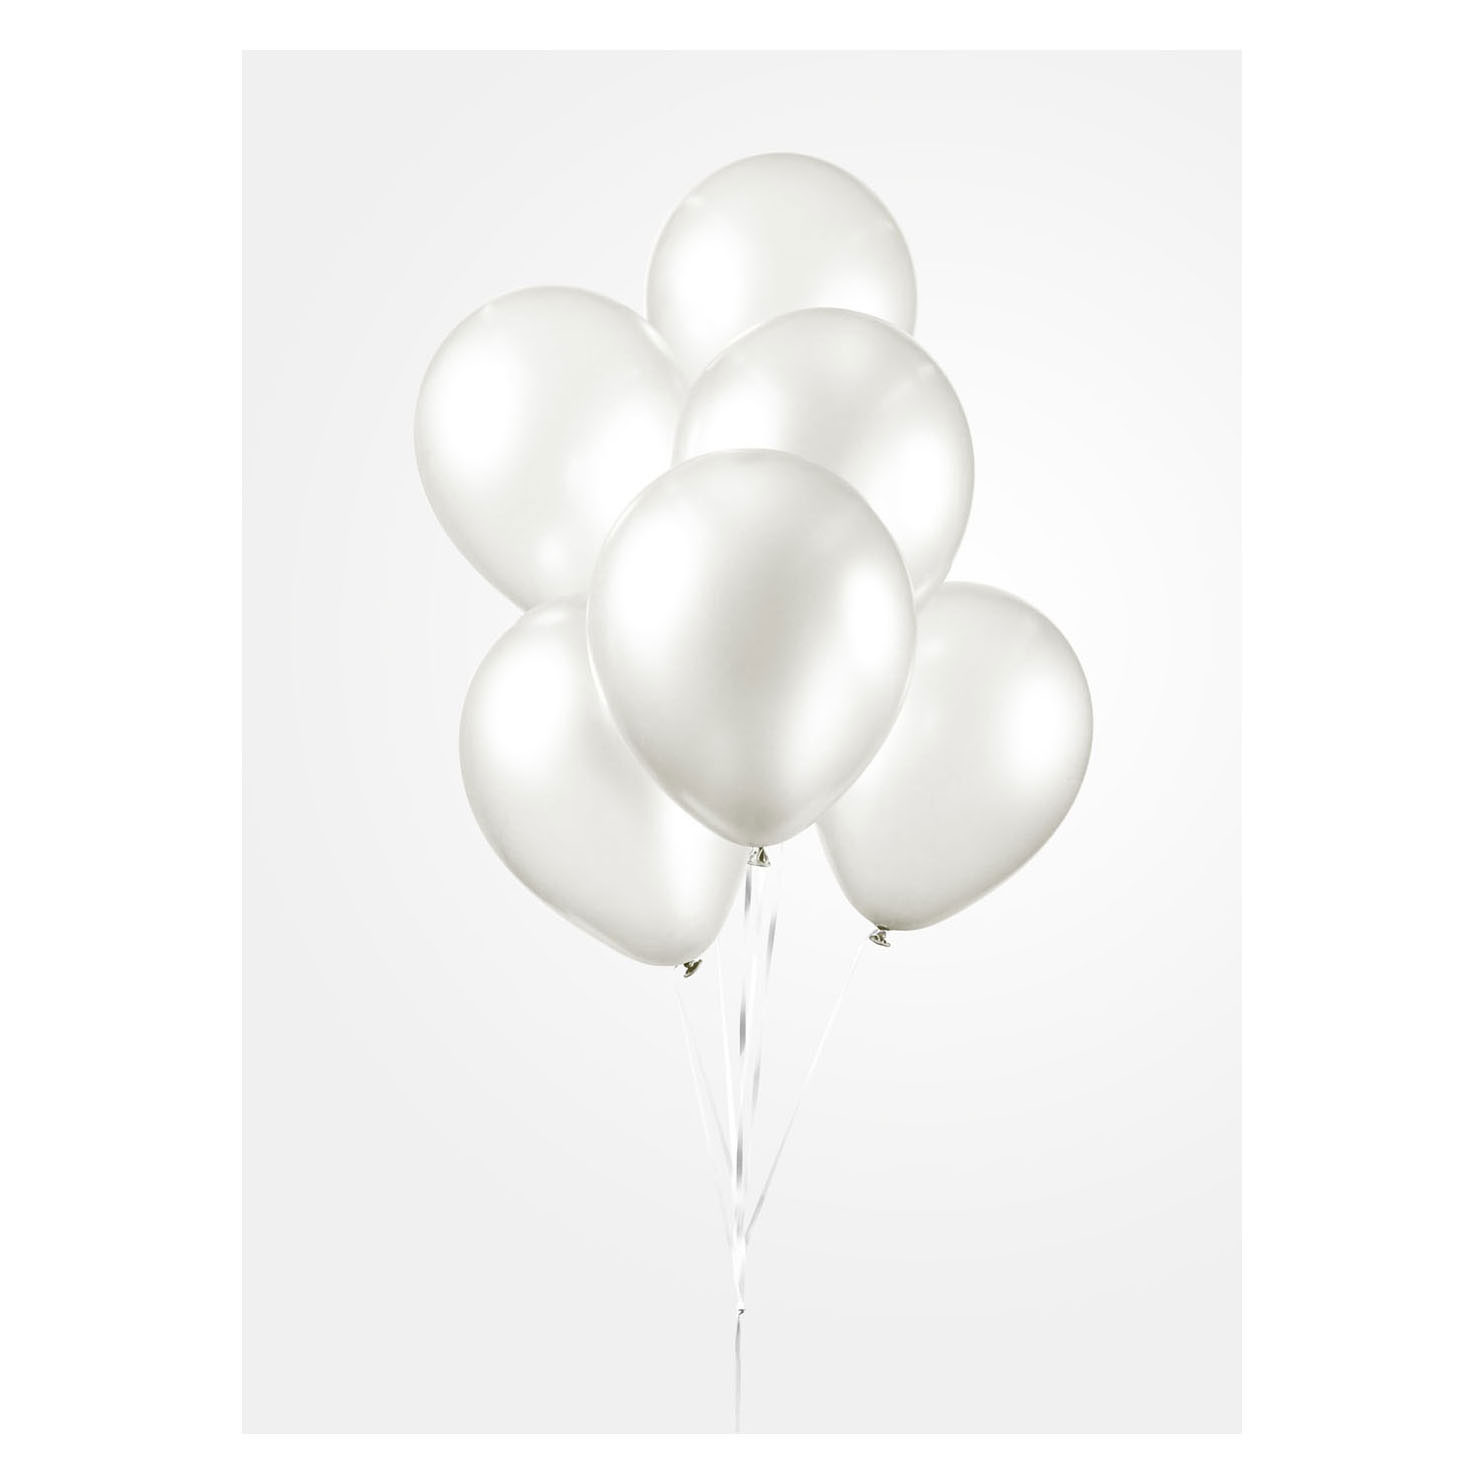 Luftballons Perlweiß 30cm, 10Stk.